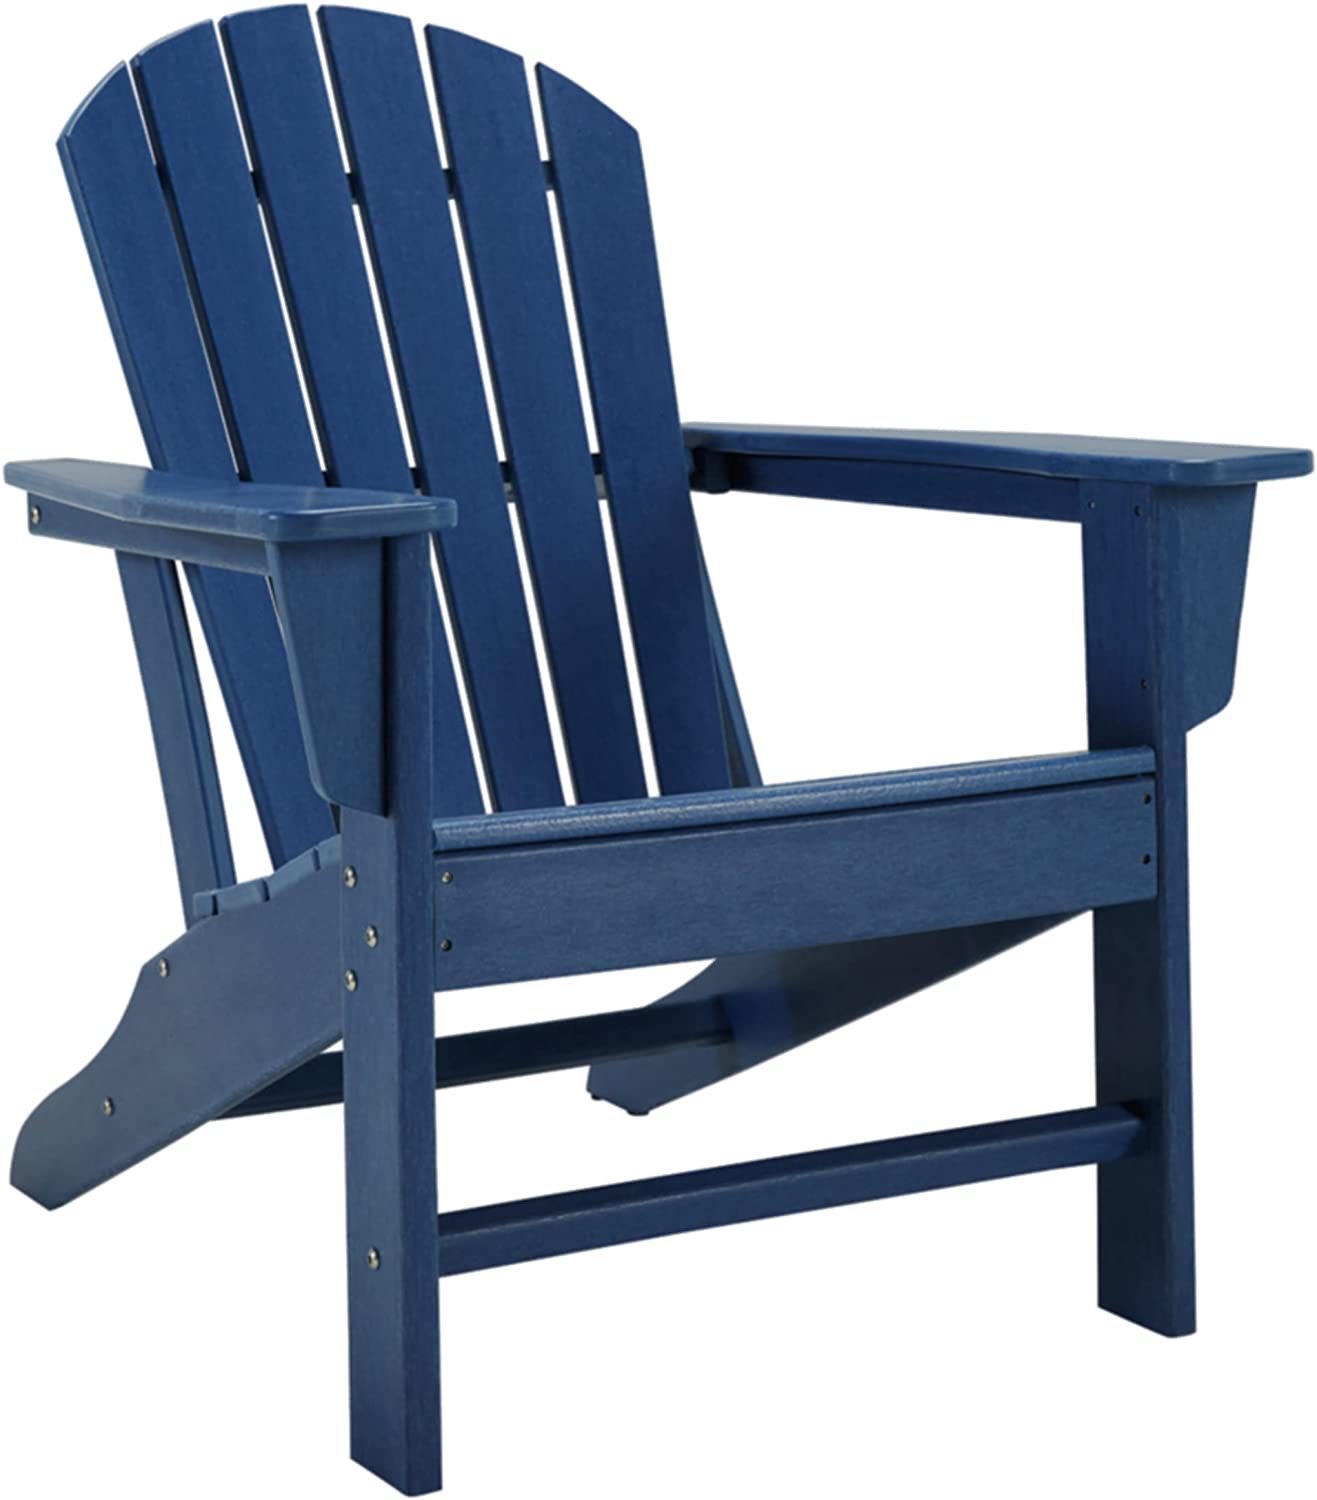 Blue Sundown Treasure Hdpe Patio Adirondack Chair From Signature Design By - $207.94